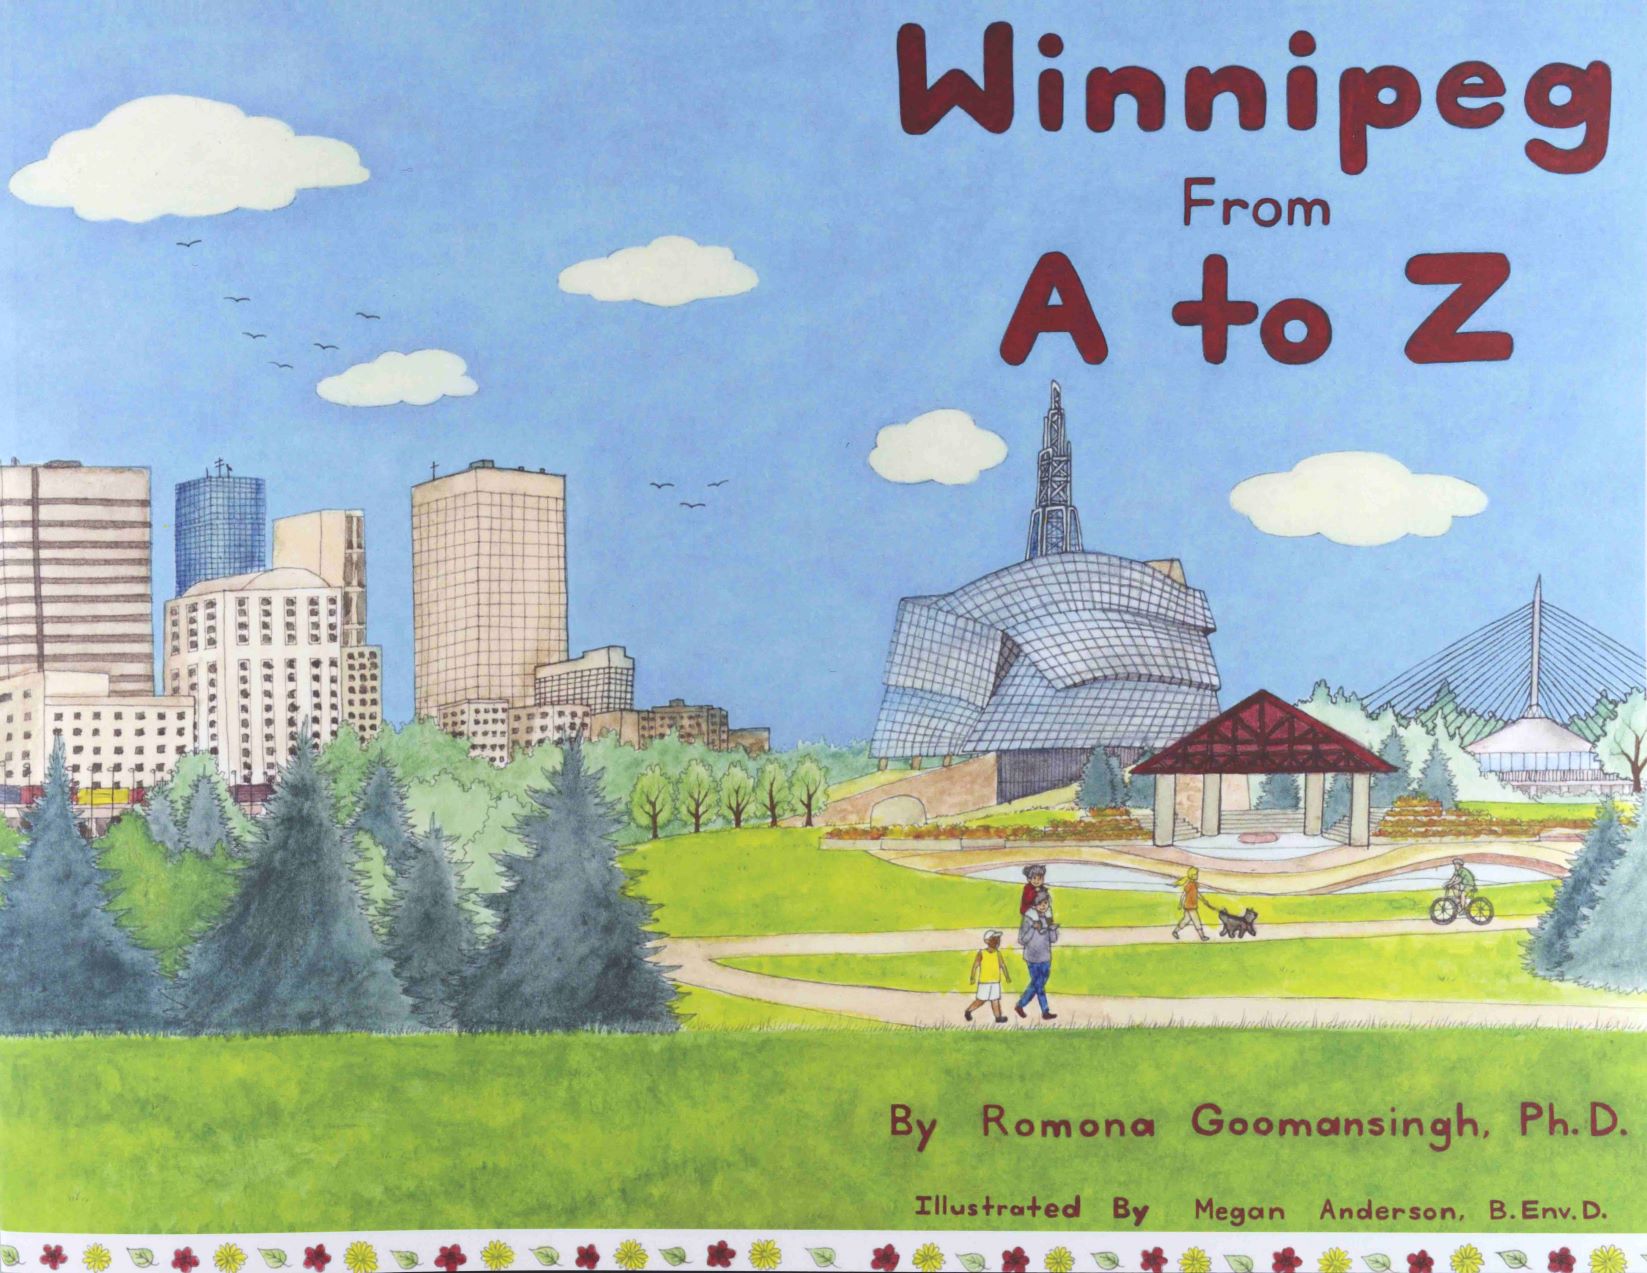 Winnipeg From A to Z